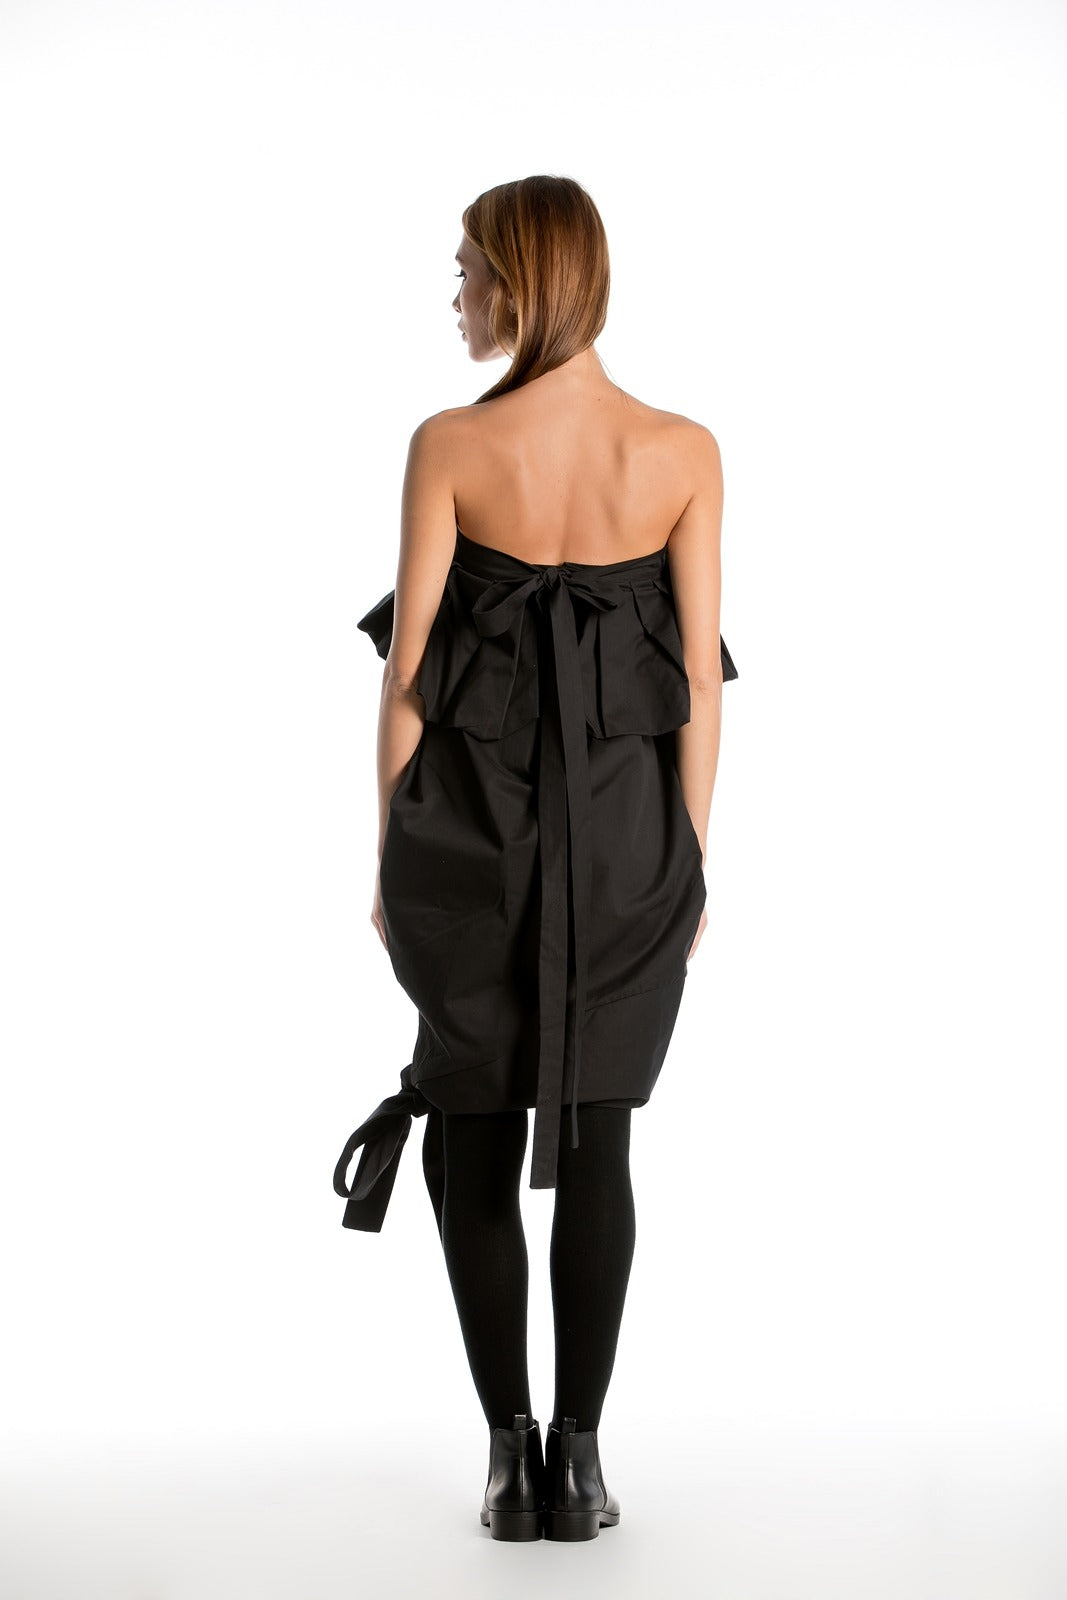 Black Strapless Dress